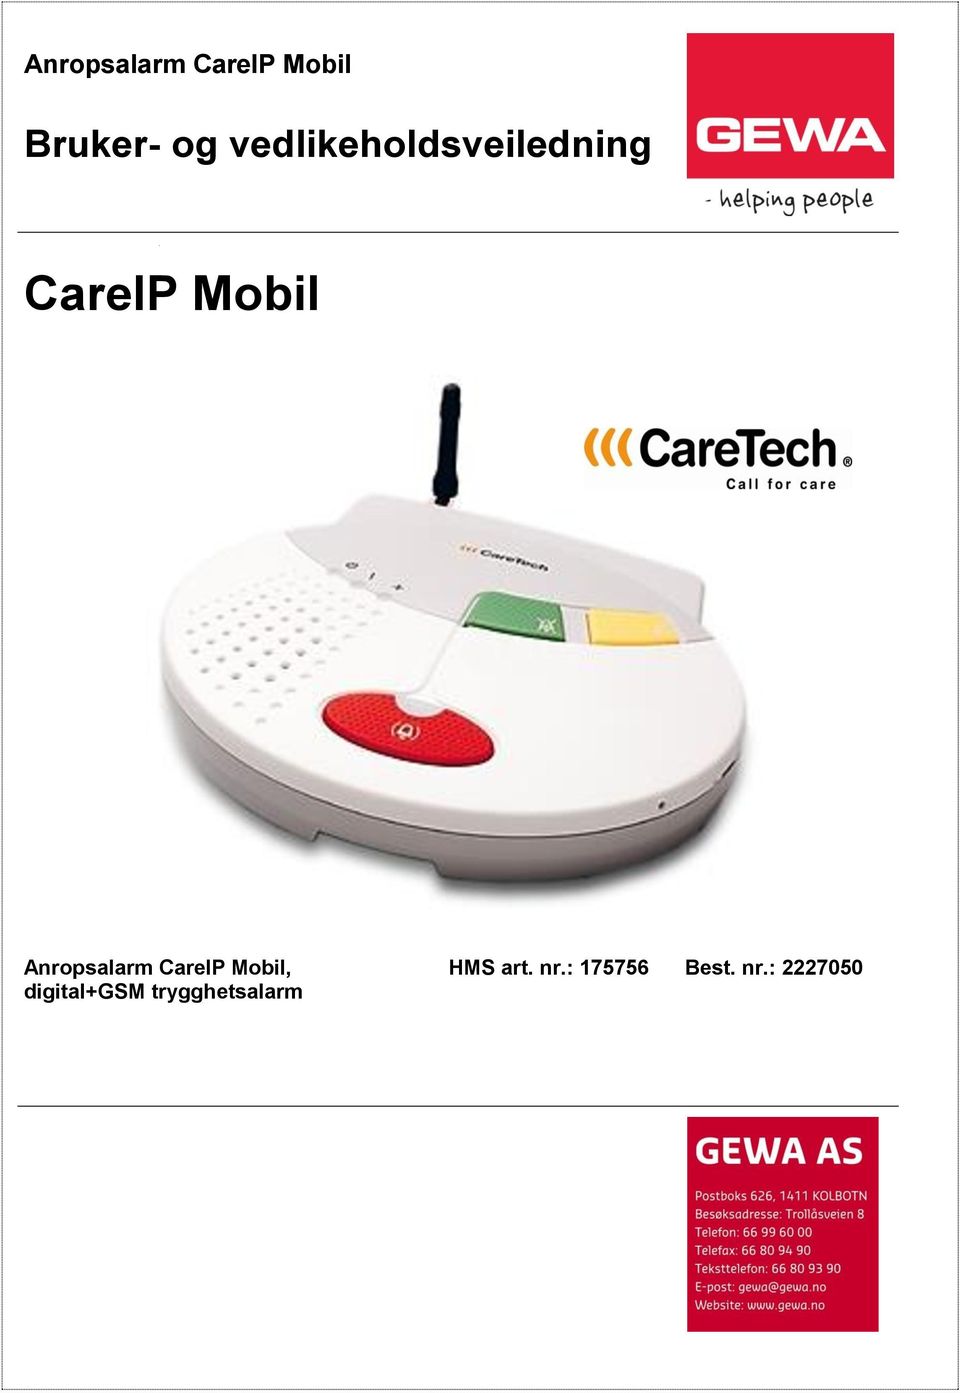 Anropsalarm CareIP Mobil, digital+gsm